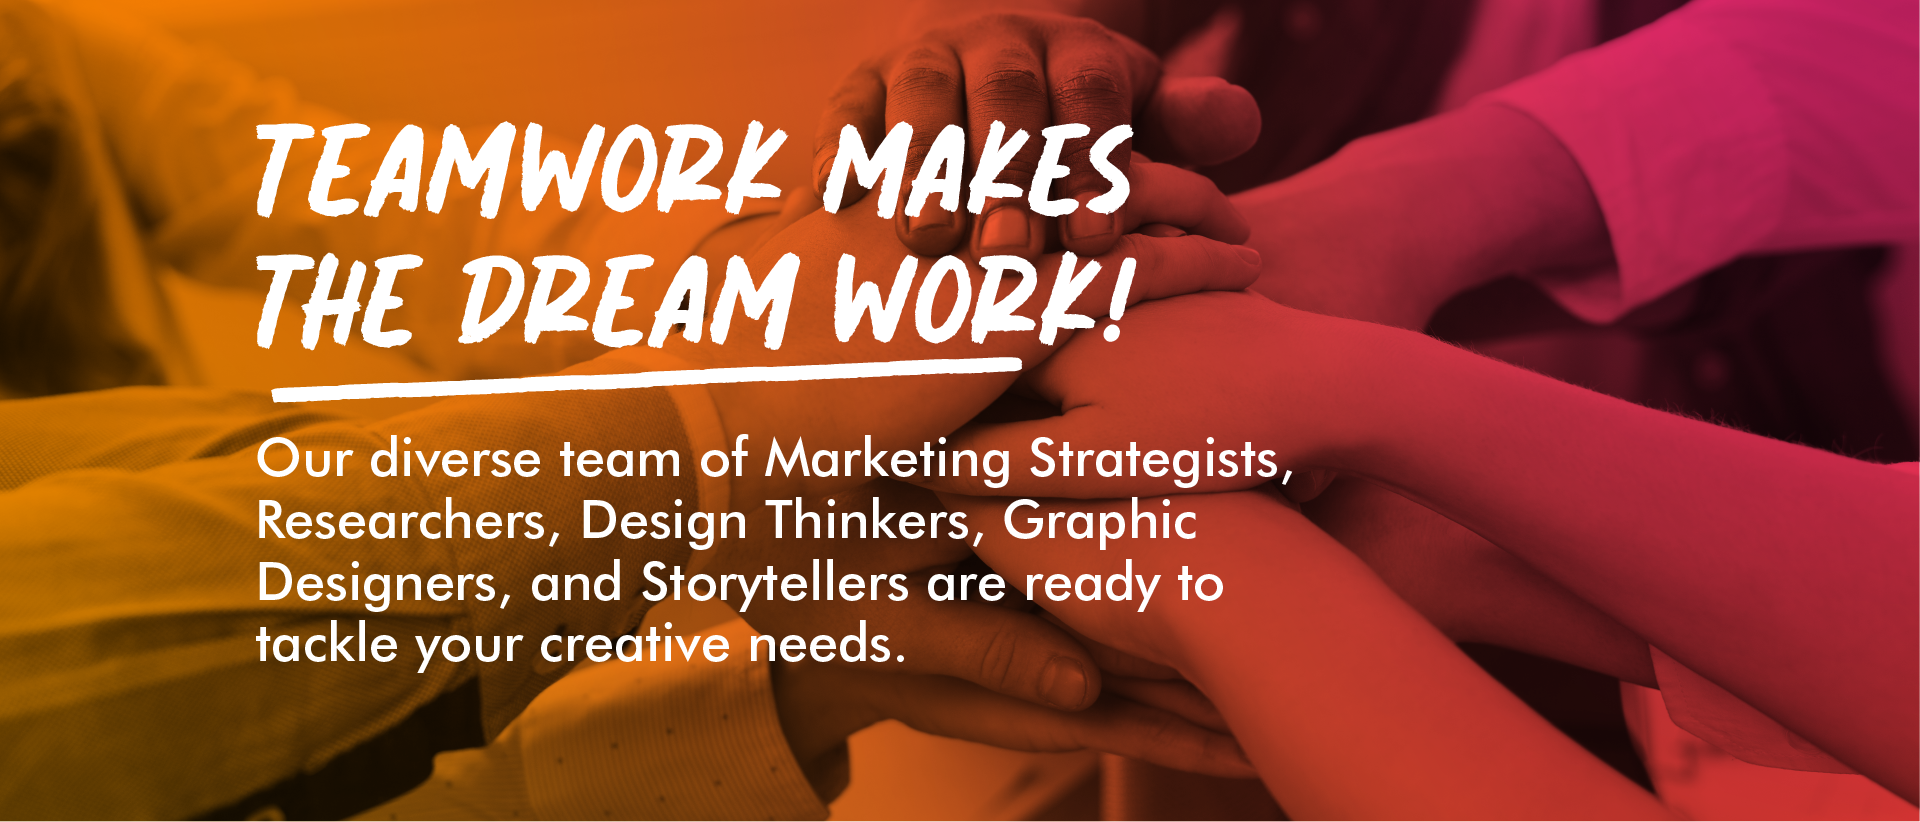 Header Image: Teamwork makes the dream work